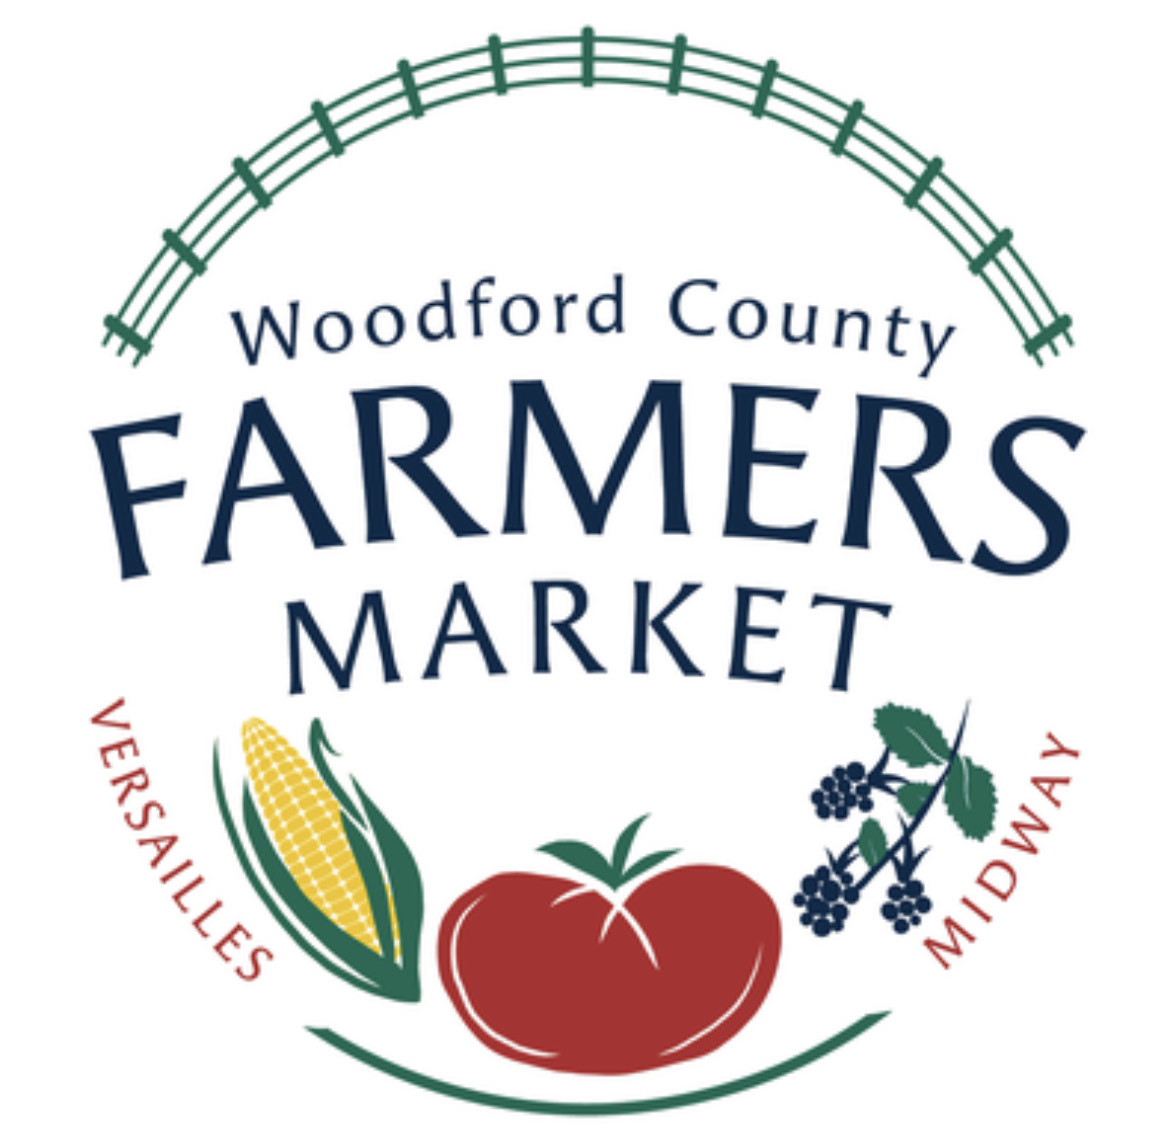 The Woodford County Farmers Market Logo